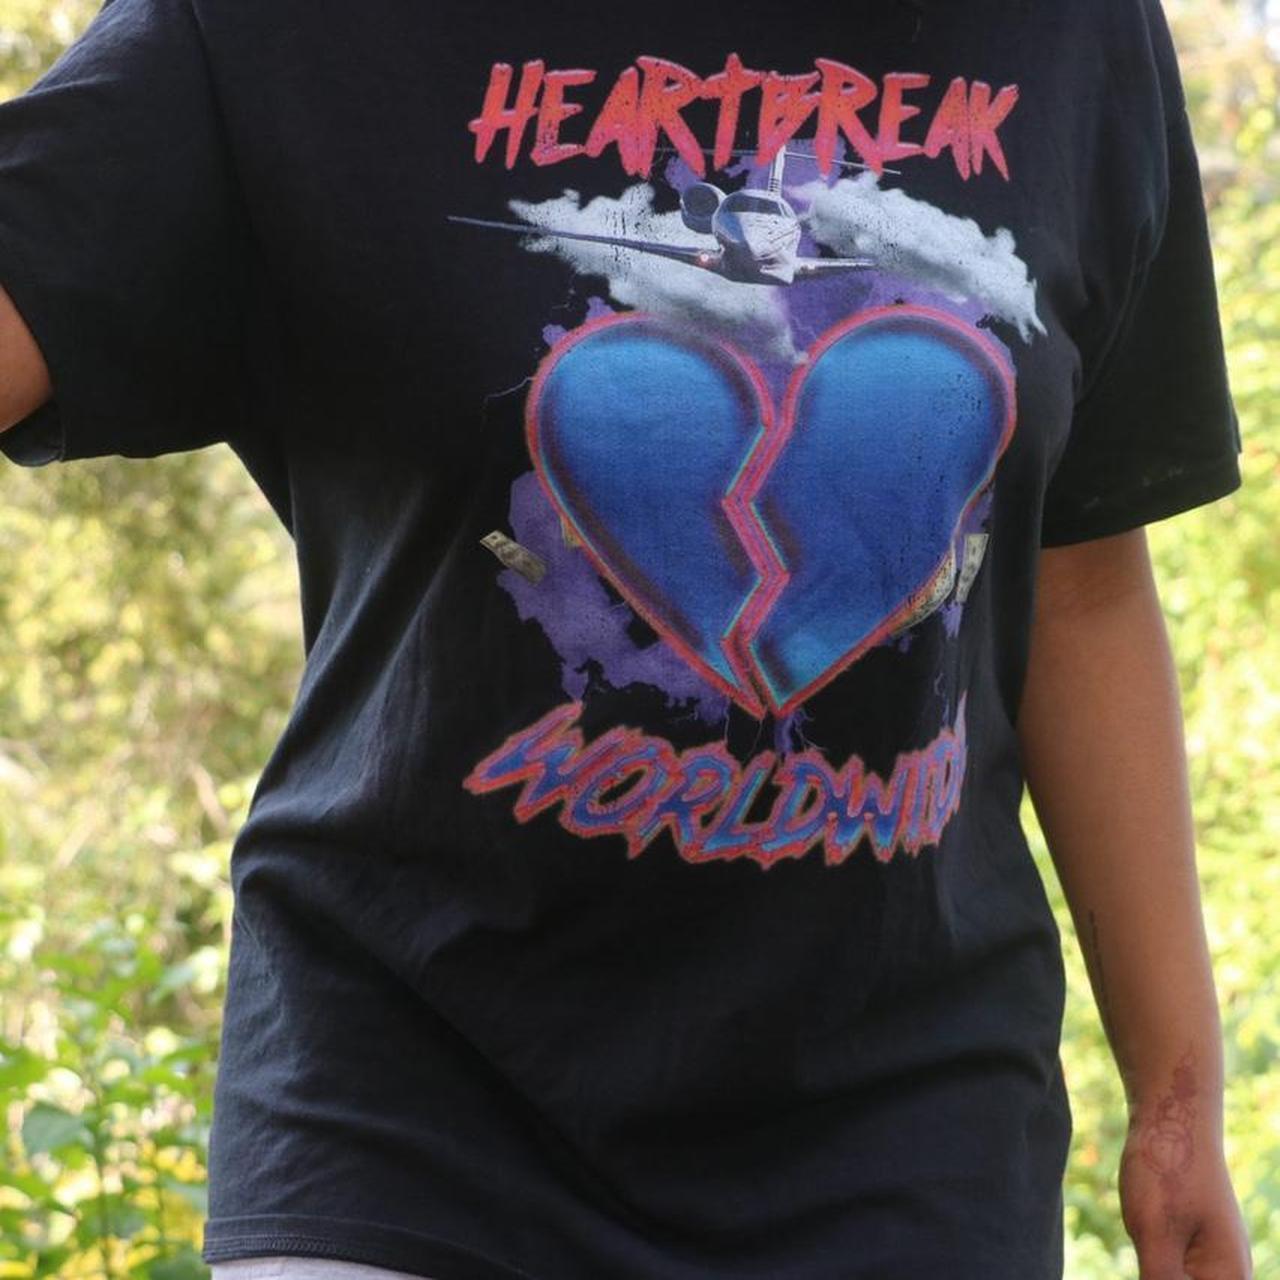 Heartbreak Women's Black and Pink T-shirt (3)